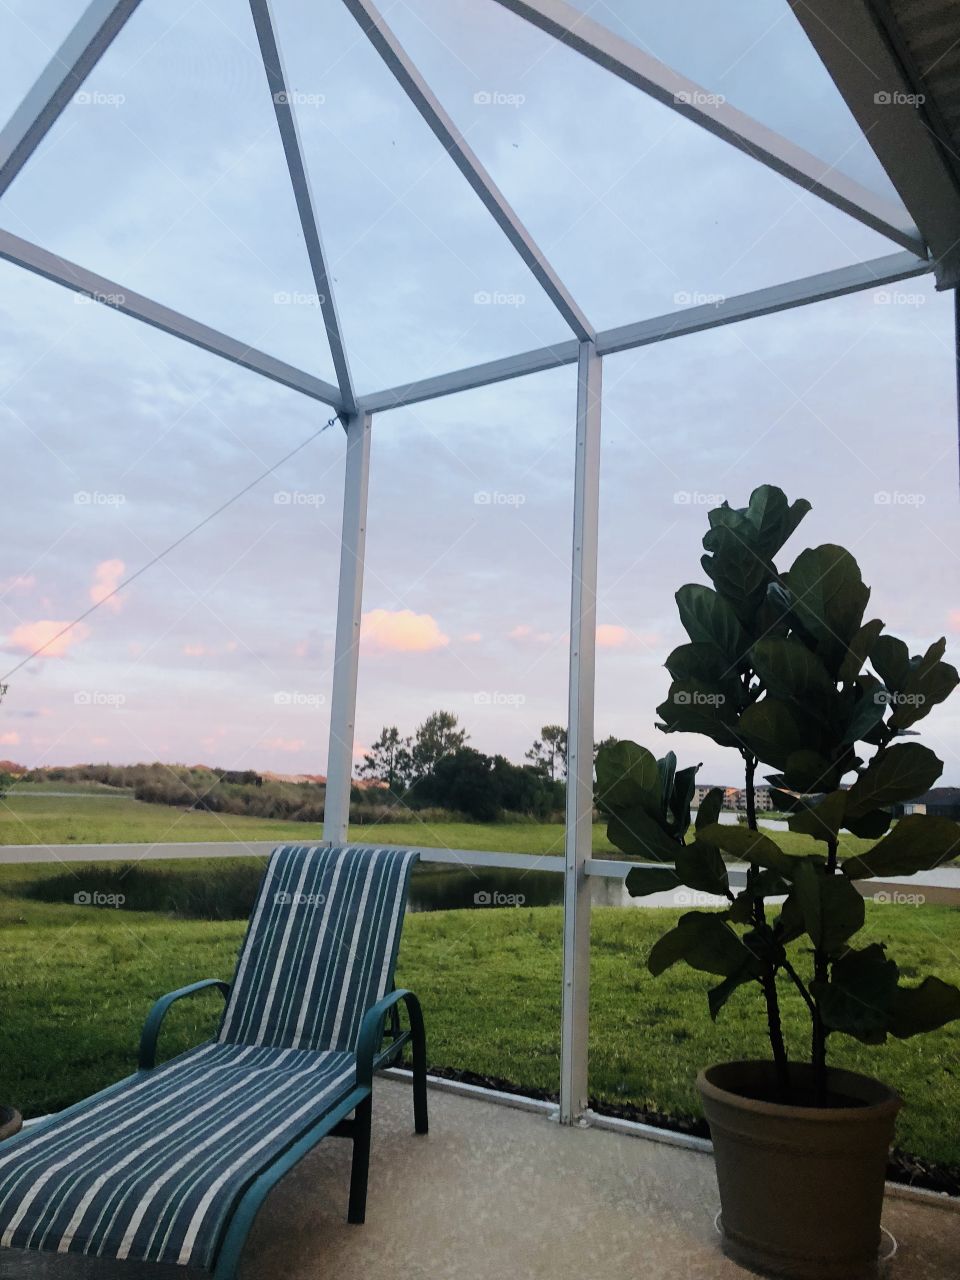 Sunset in Florida